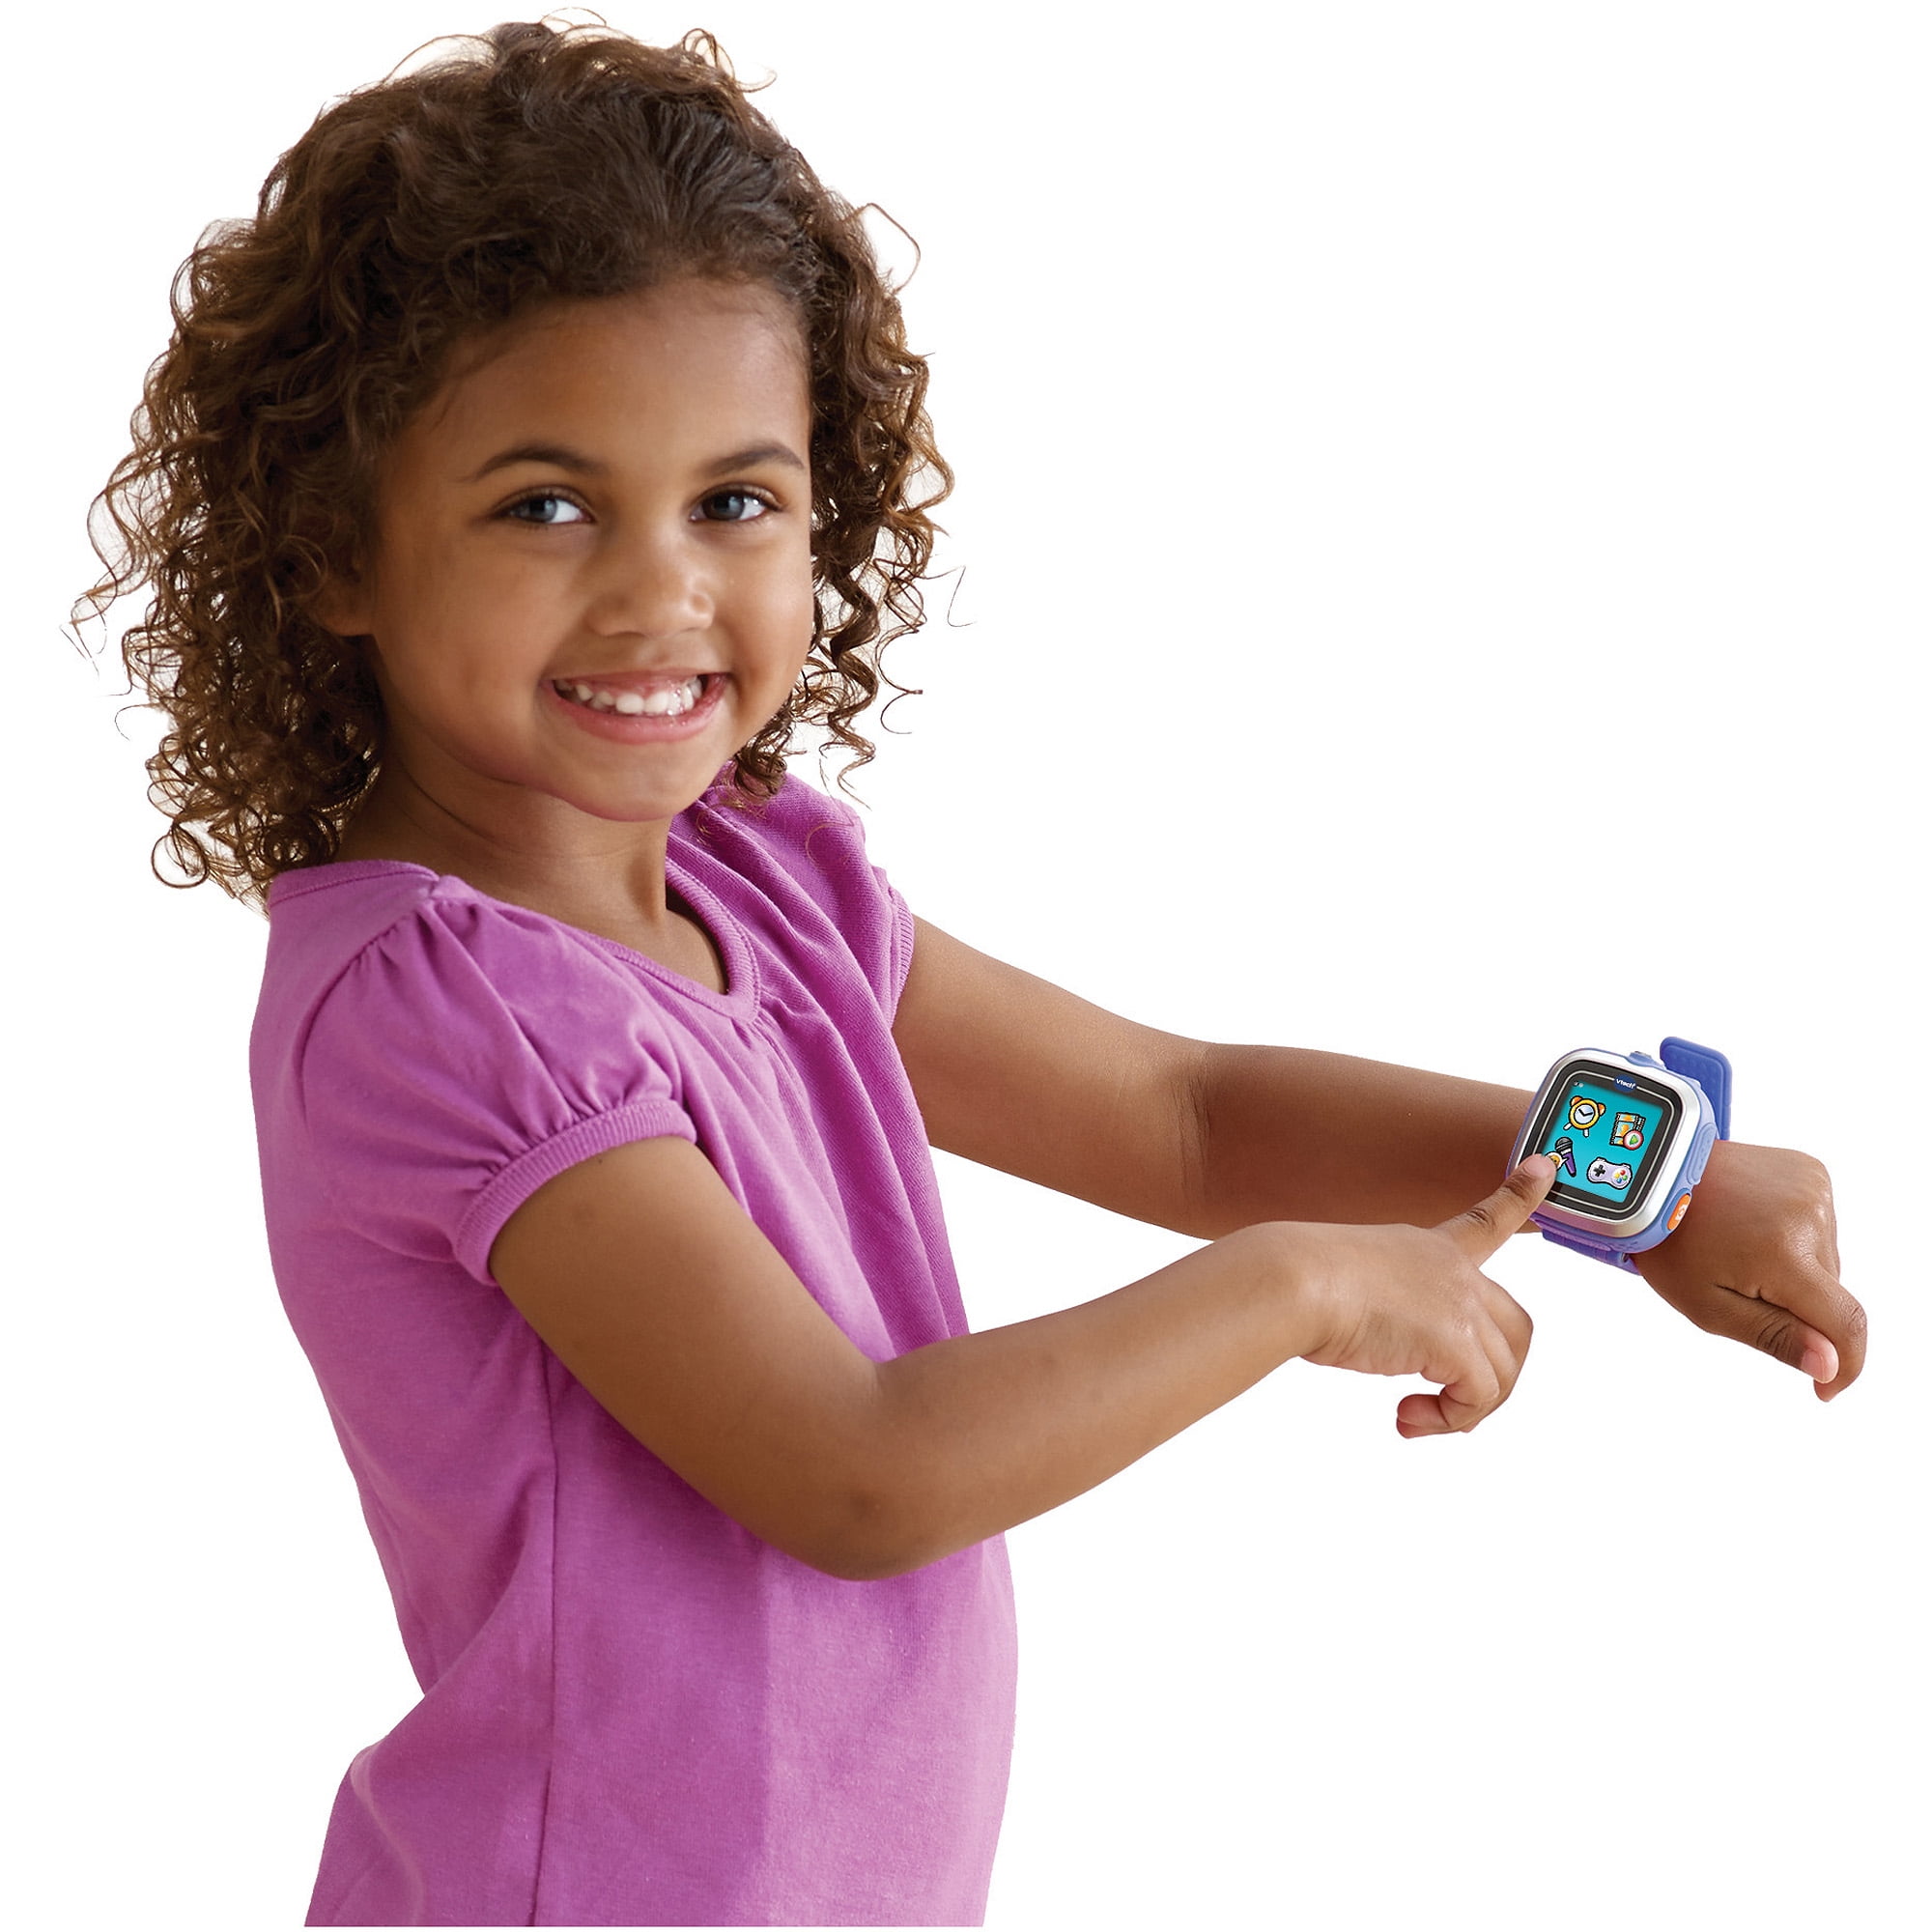 Kidizoom Smart Watch Couleurs assorties. Est une surprise